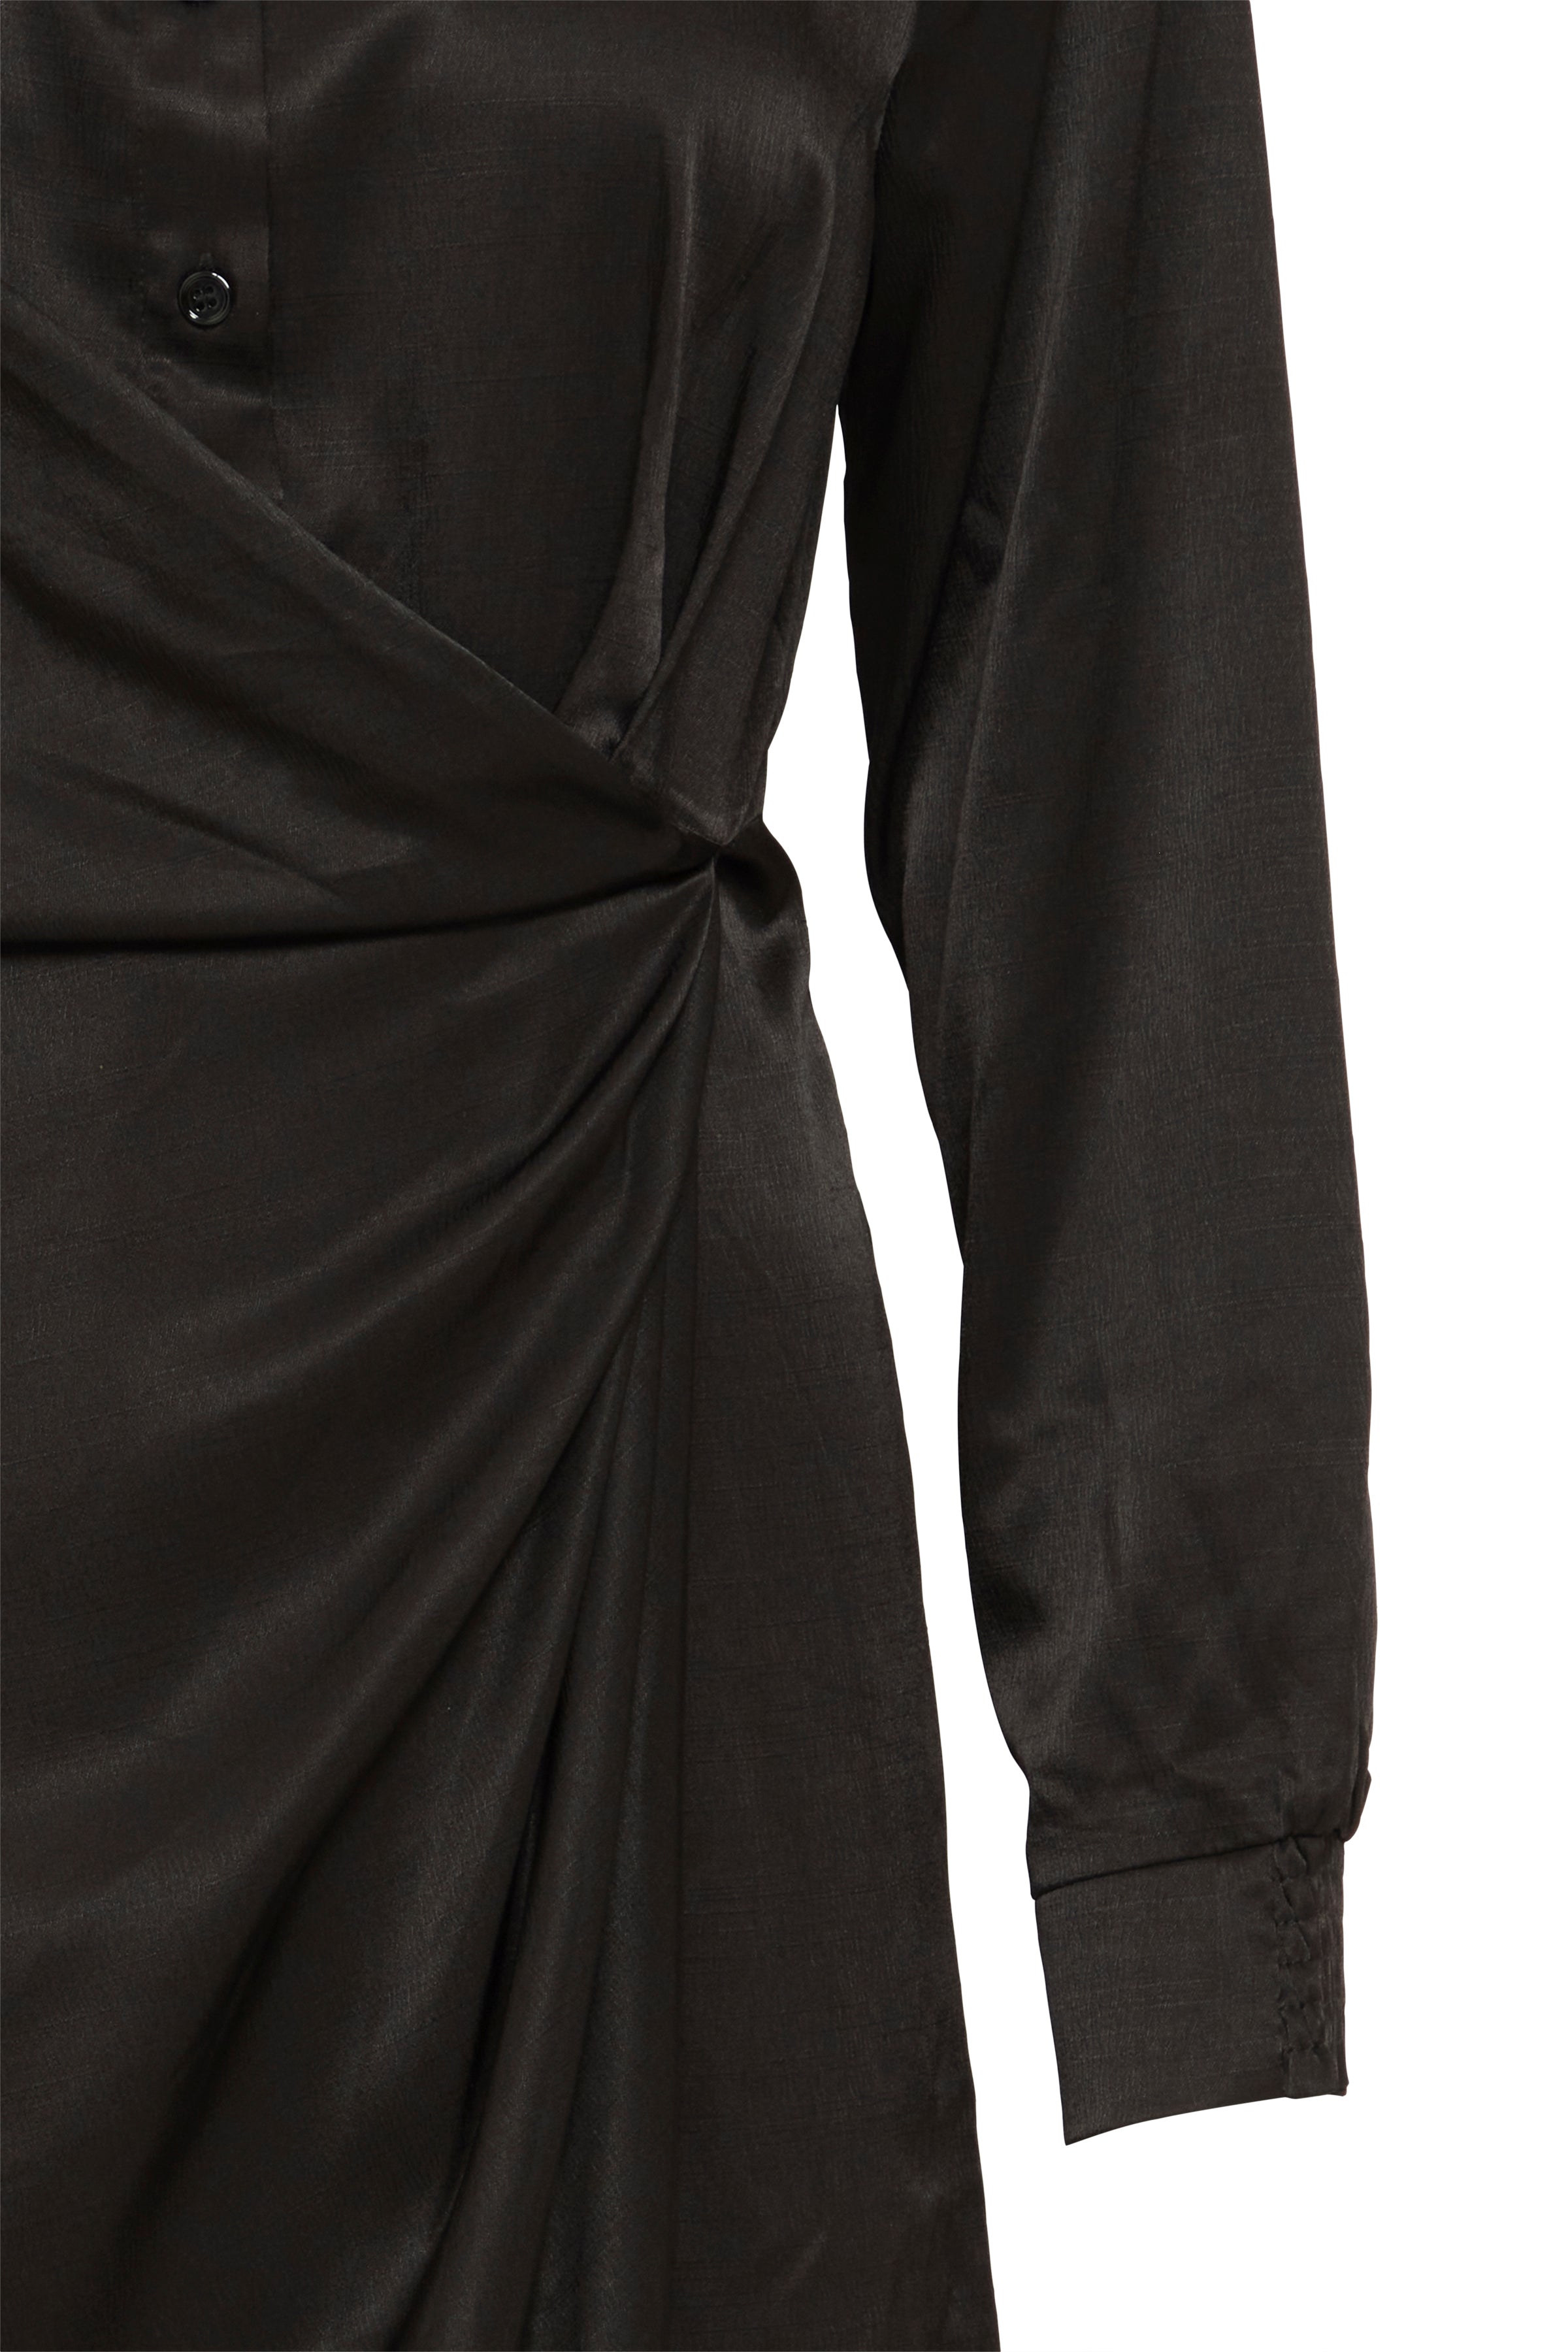 FRViline Dress - Black